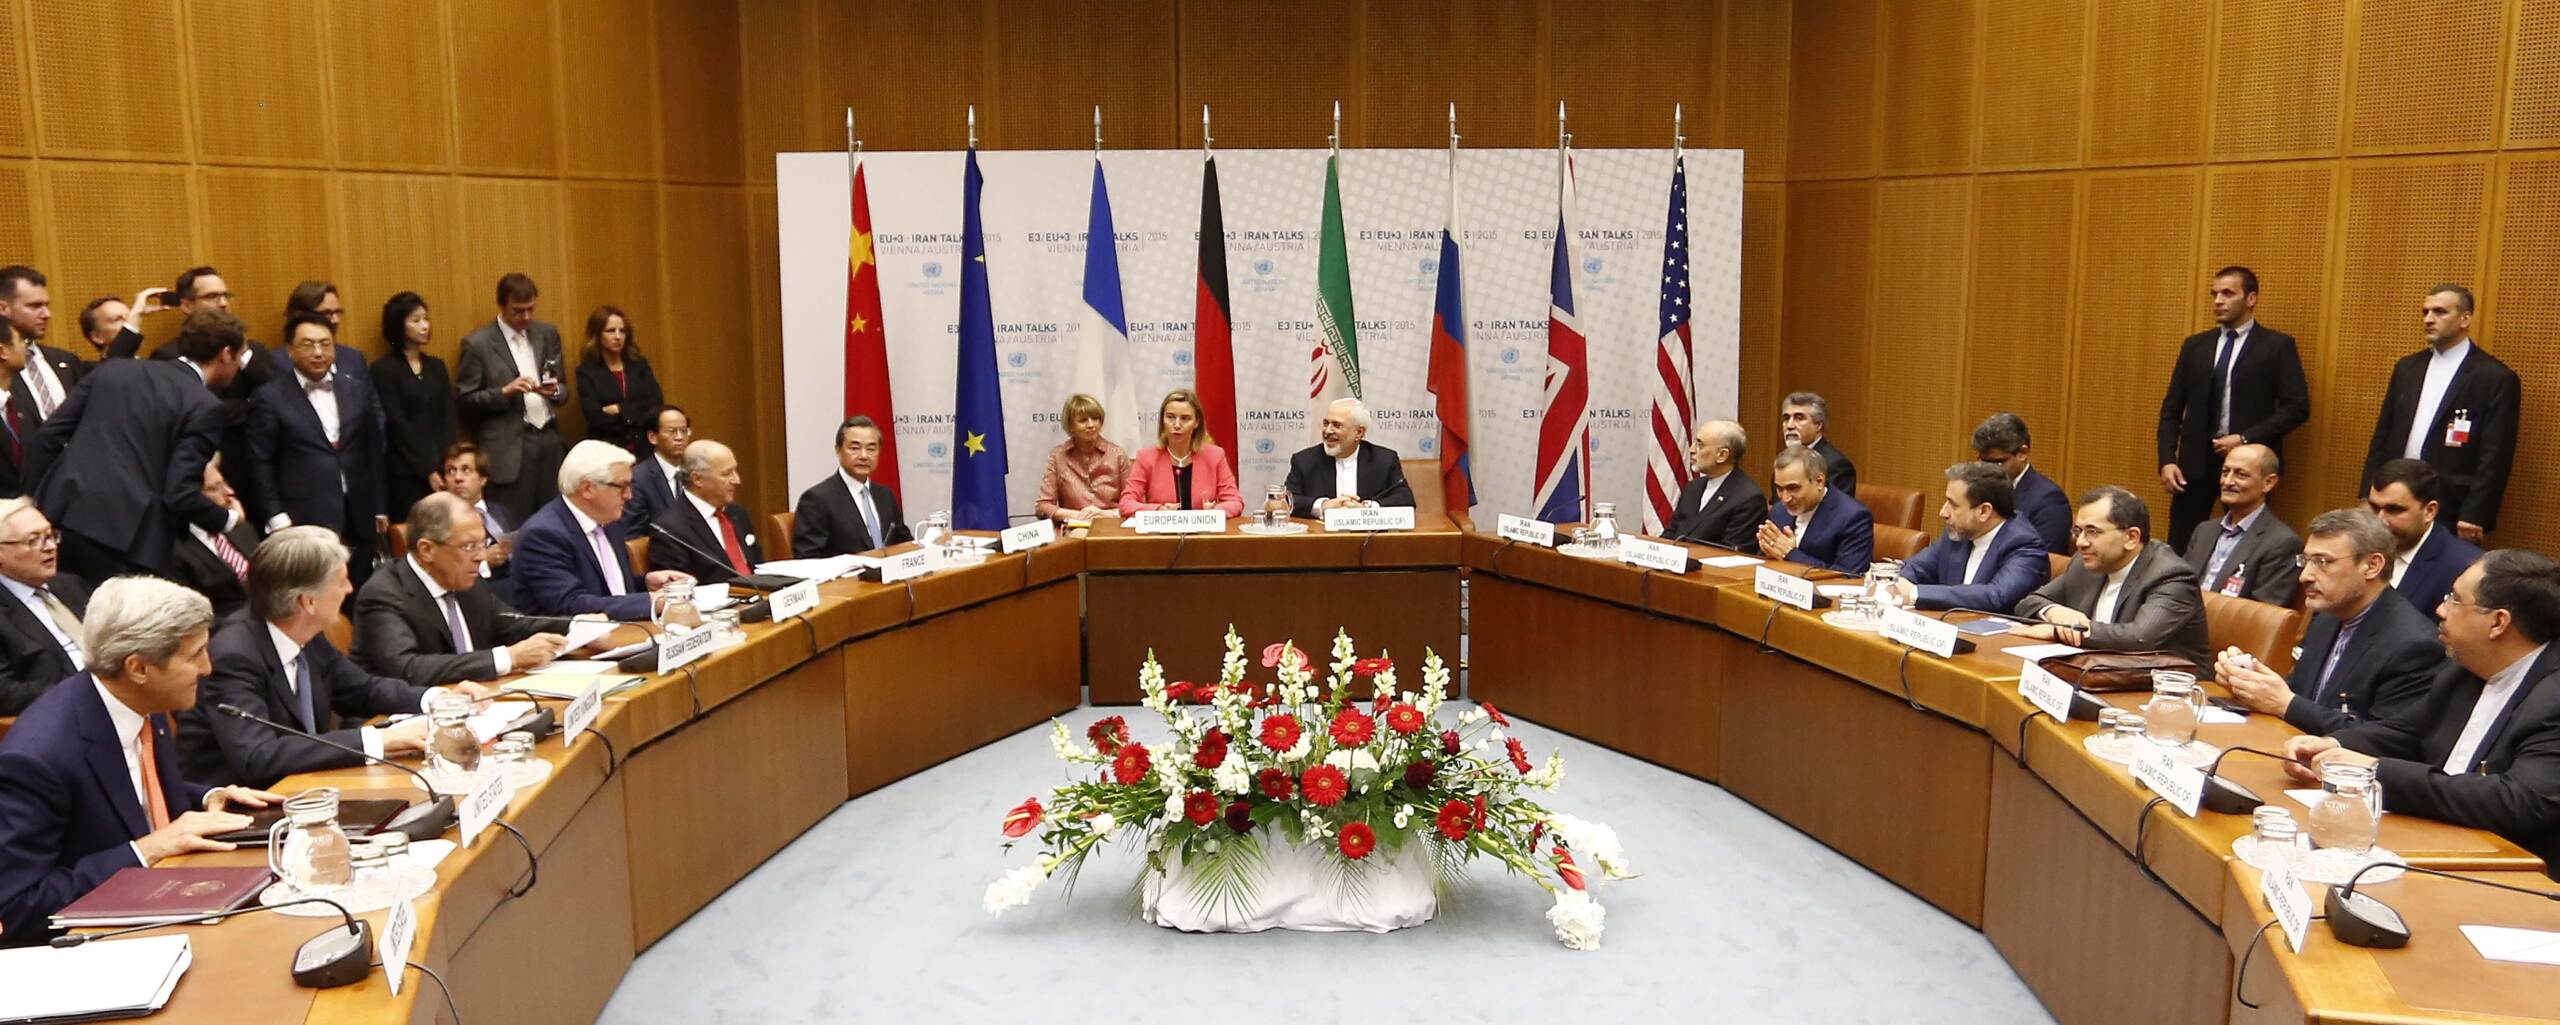 ifmat - Iran diplomacy in deadlock